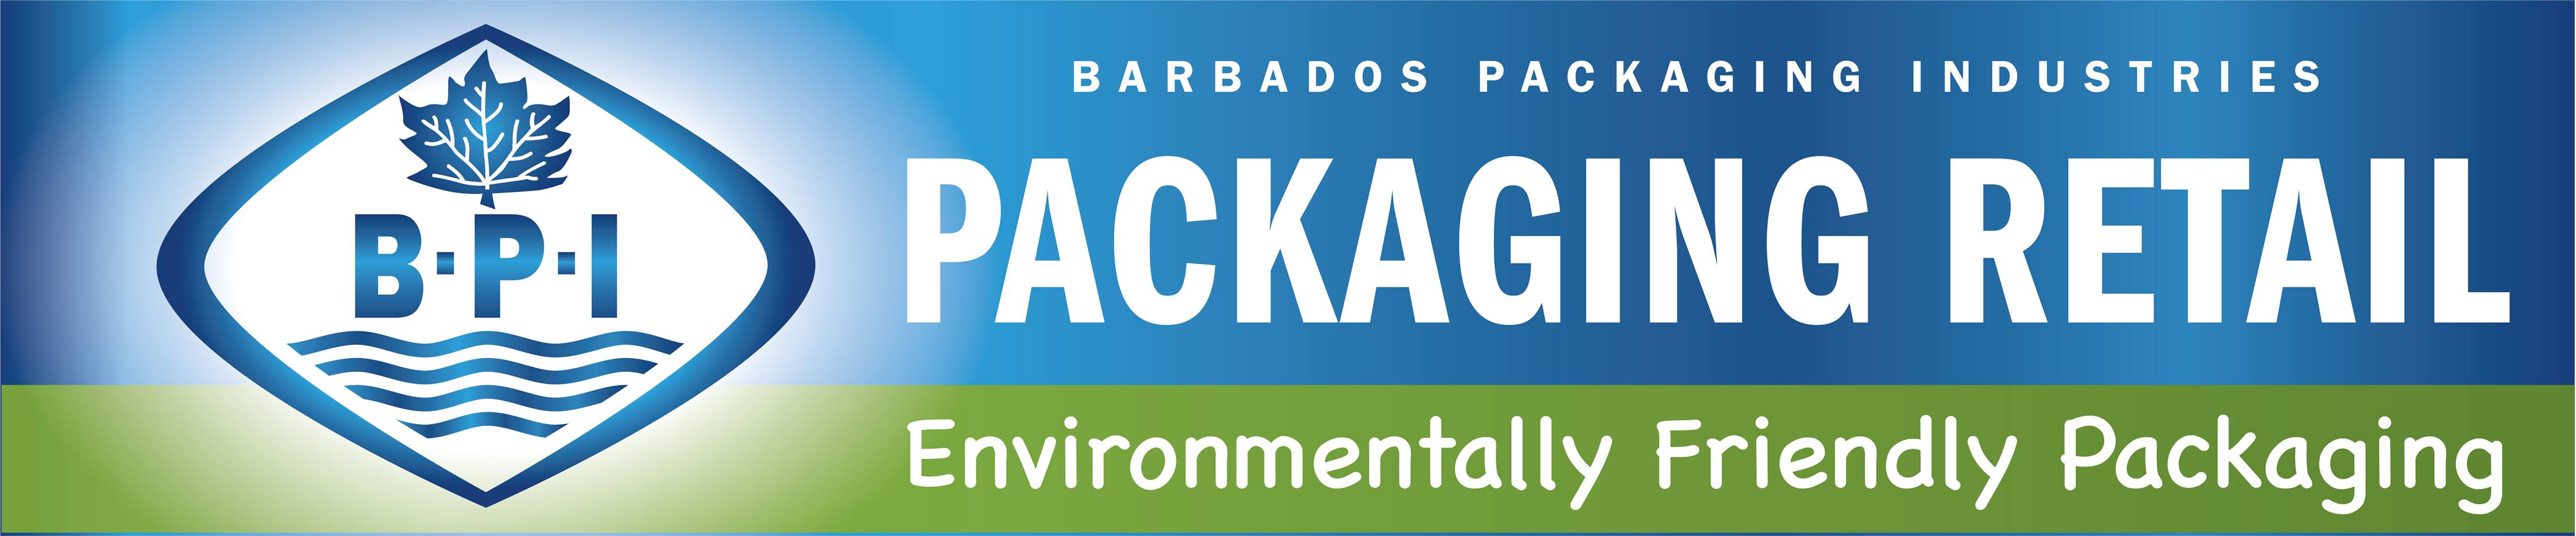 Barbados Packaging Industries - Environmentally Friendly Banner